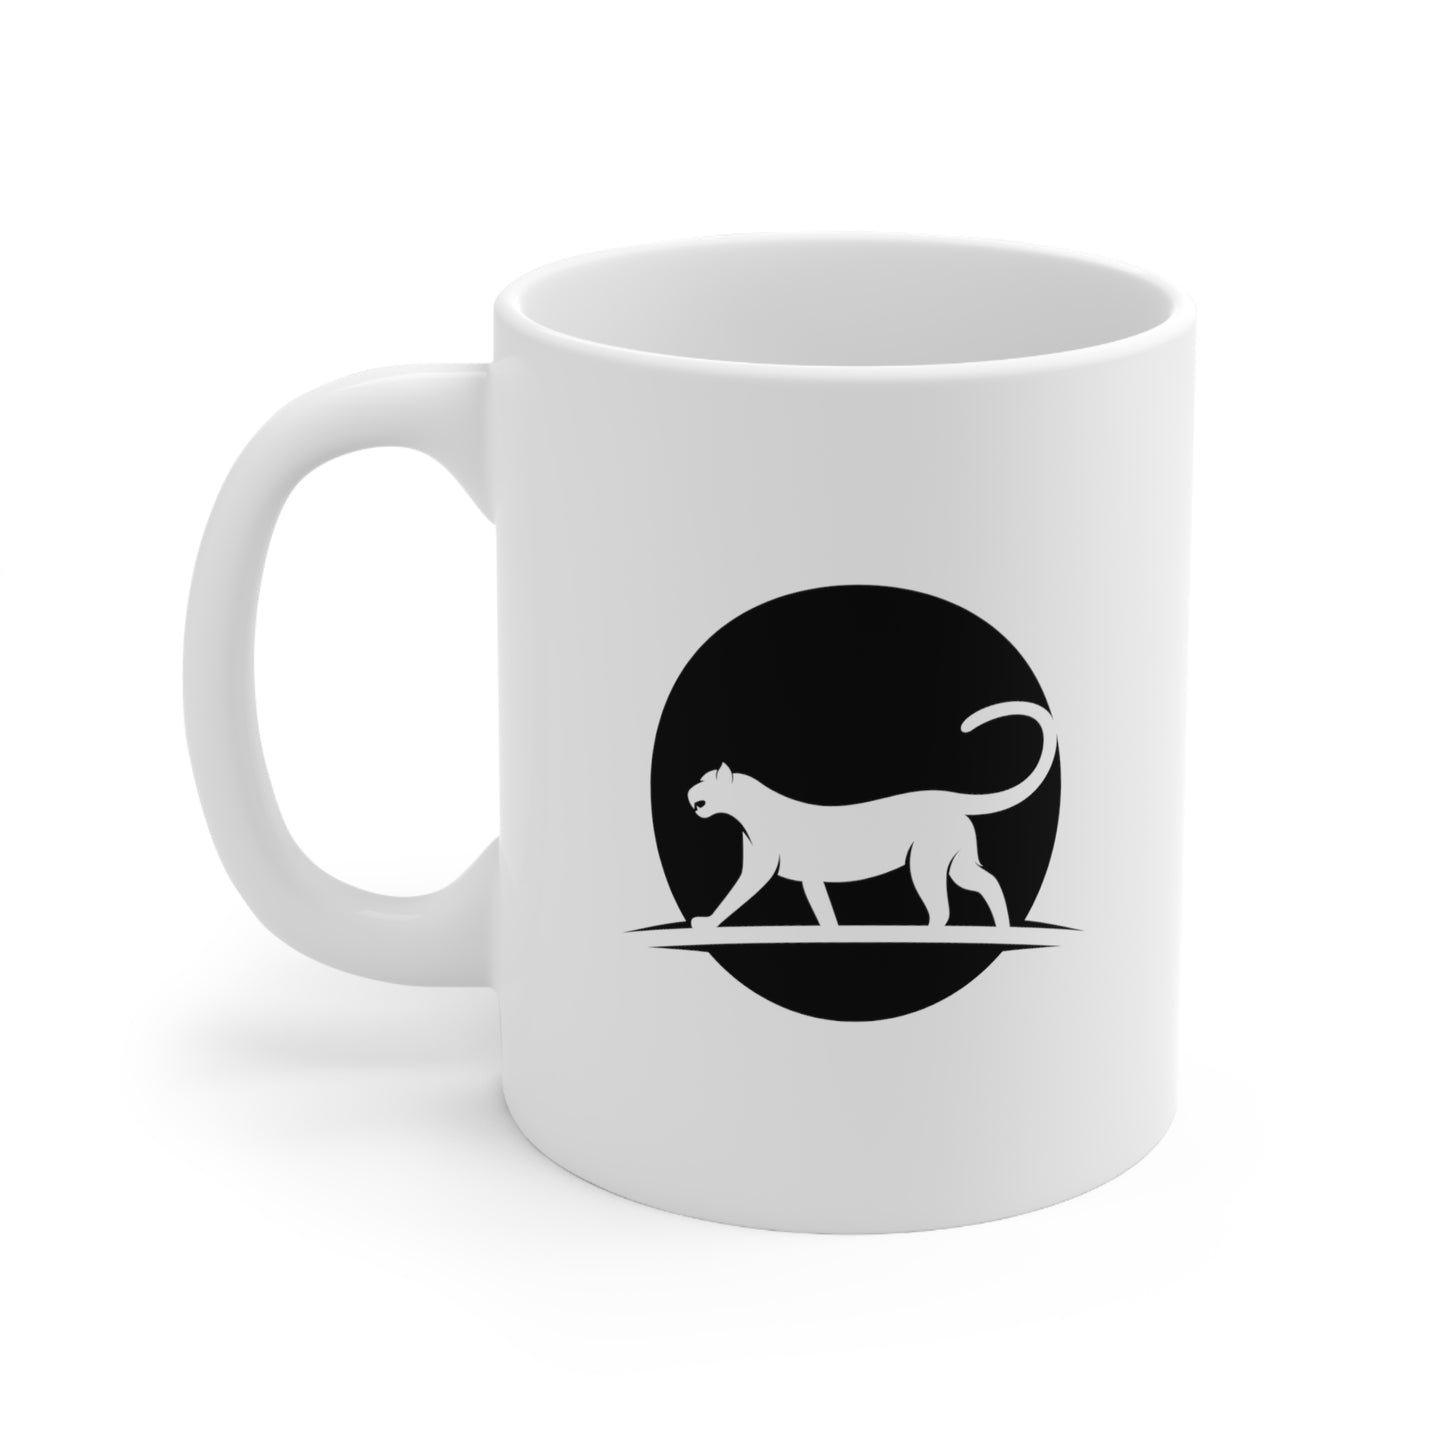 Cat Life Coffee Mug Ceramic Cup